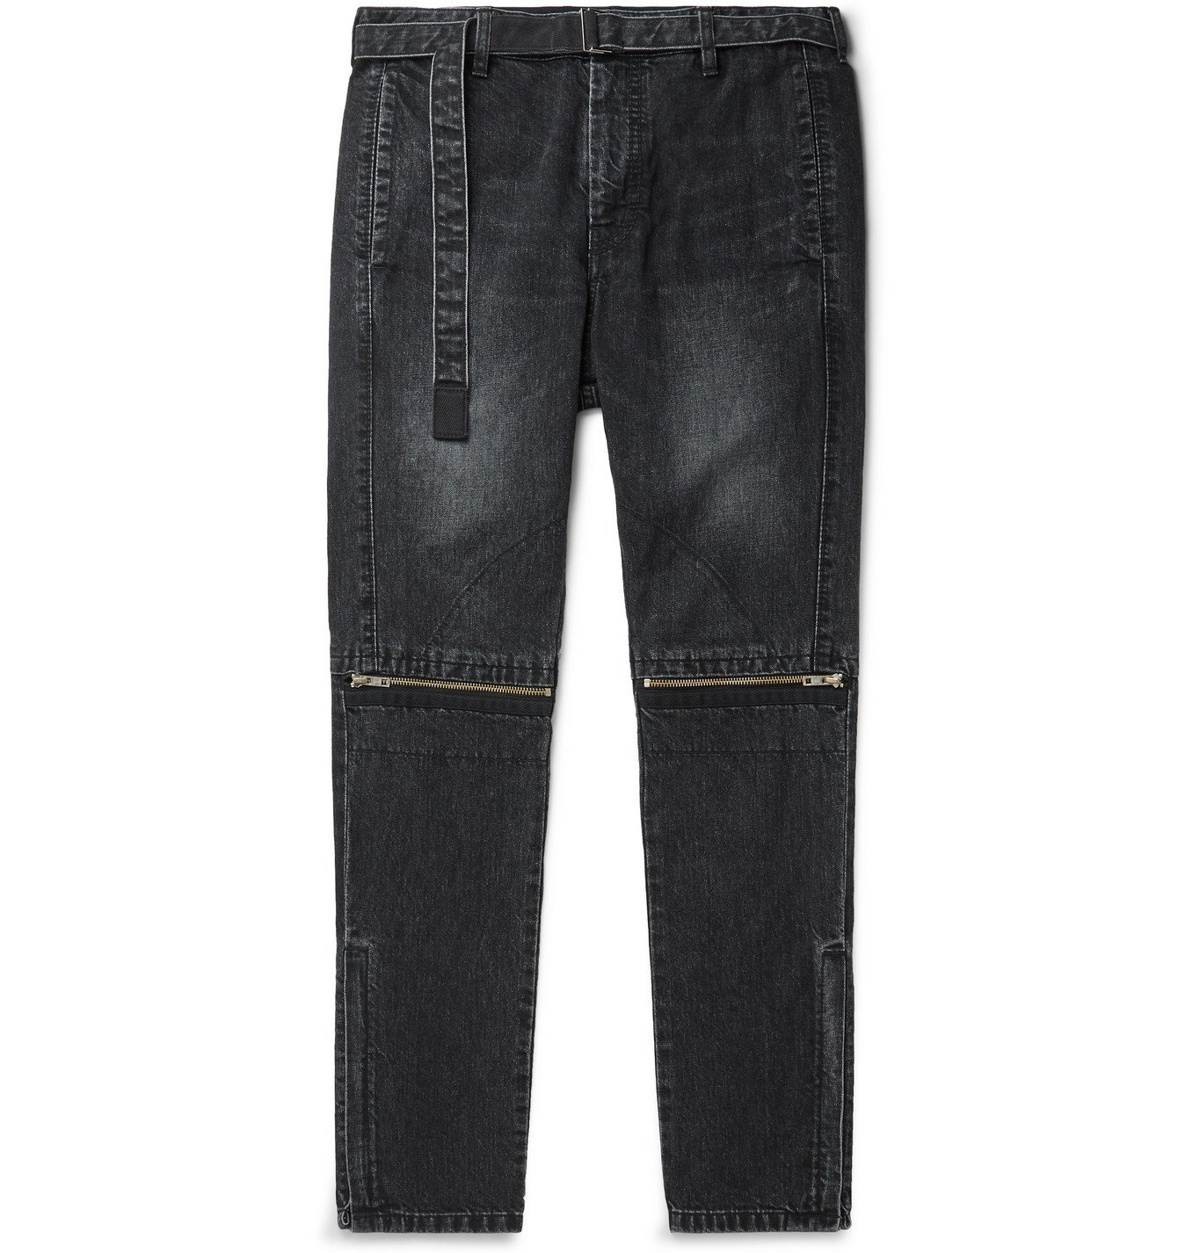 Sacai - Slim-Fit Belted Denim Jeans - Black